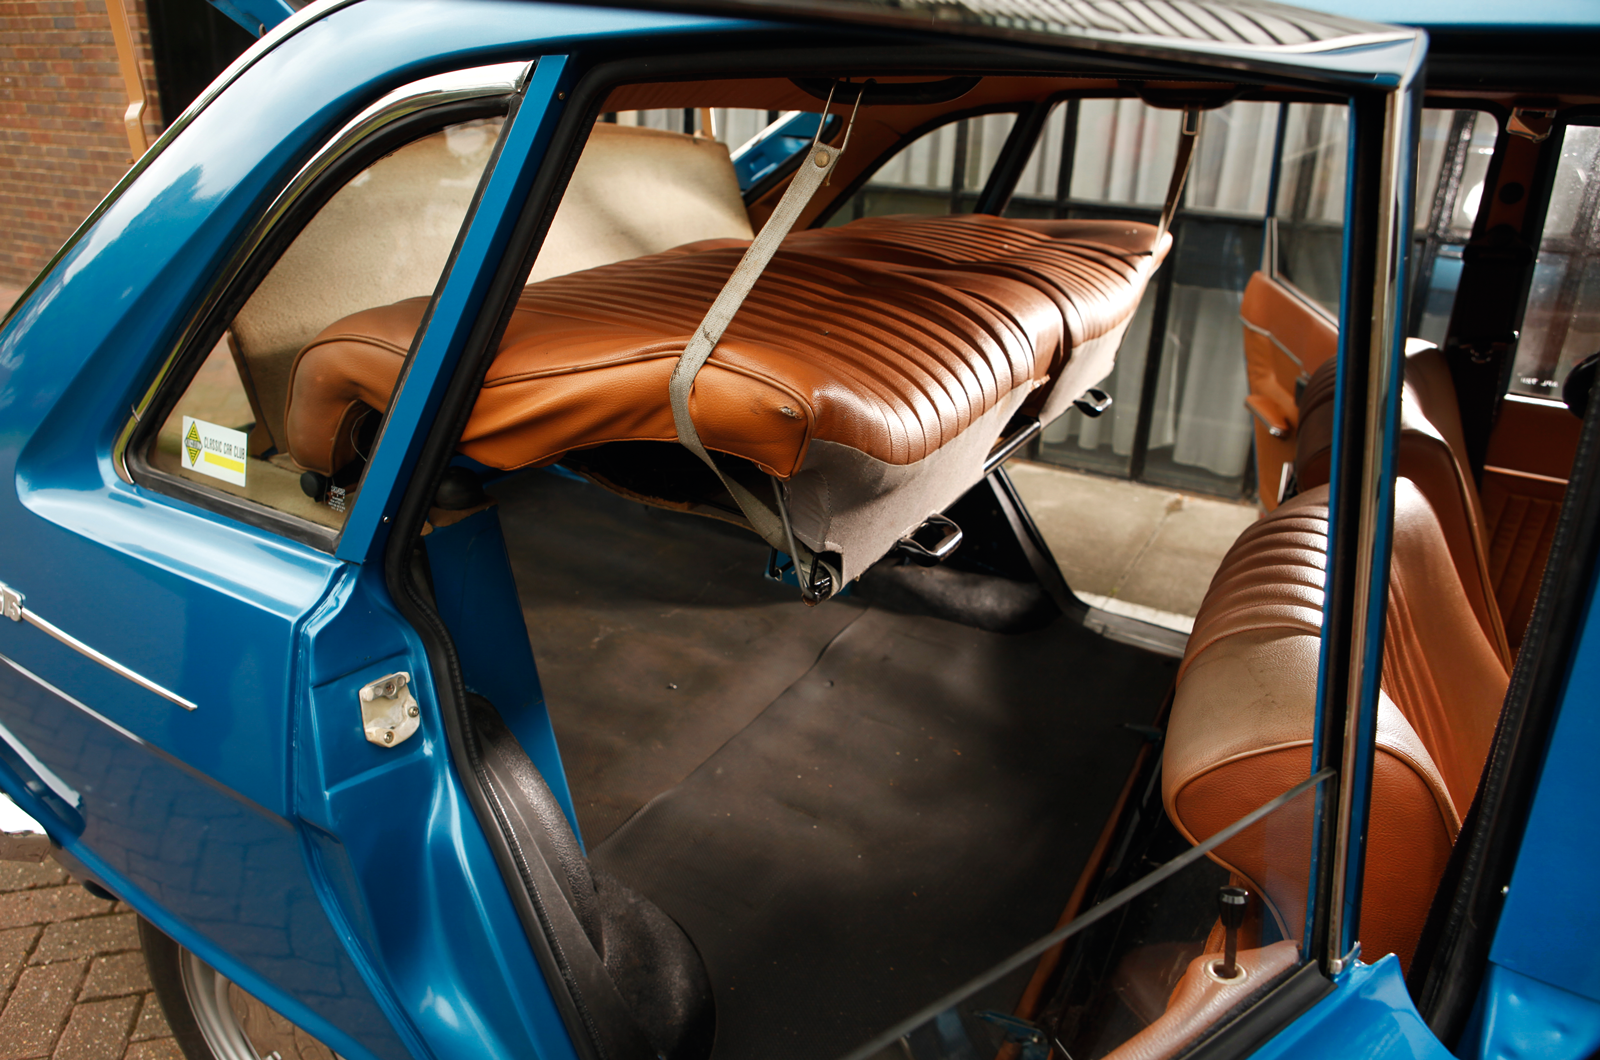 Classic & Sports Car - Perks of the job: Ford Cortina 1600E vs Renault 16TS vs Fiat 125S